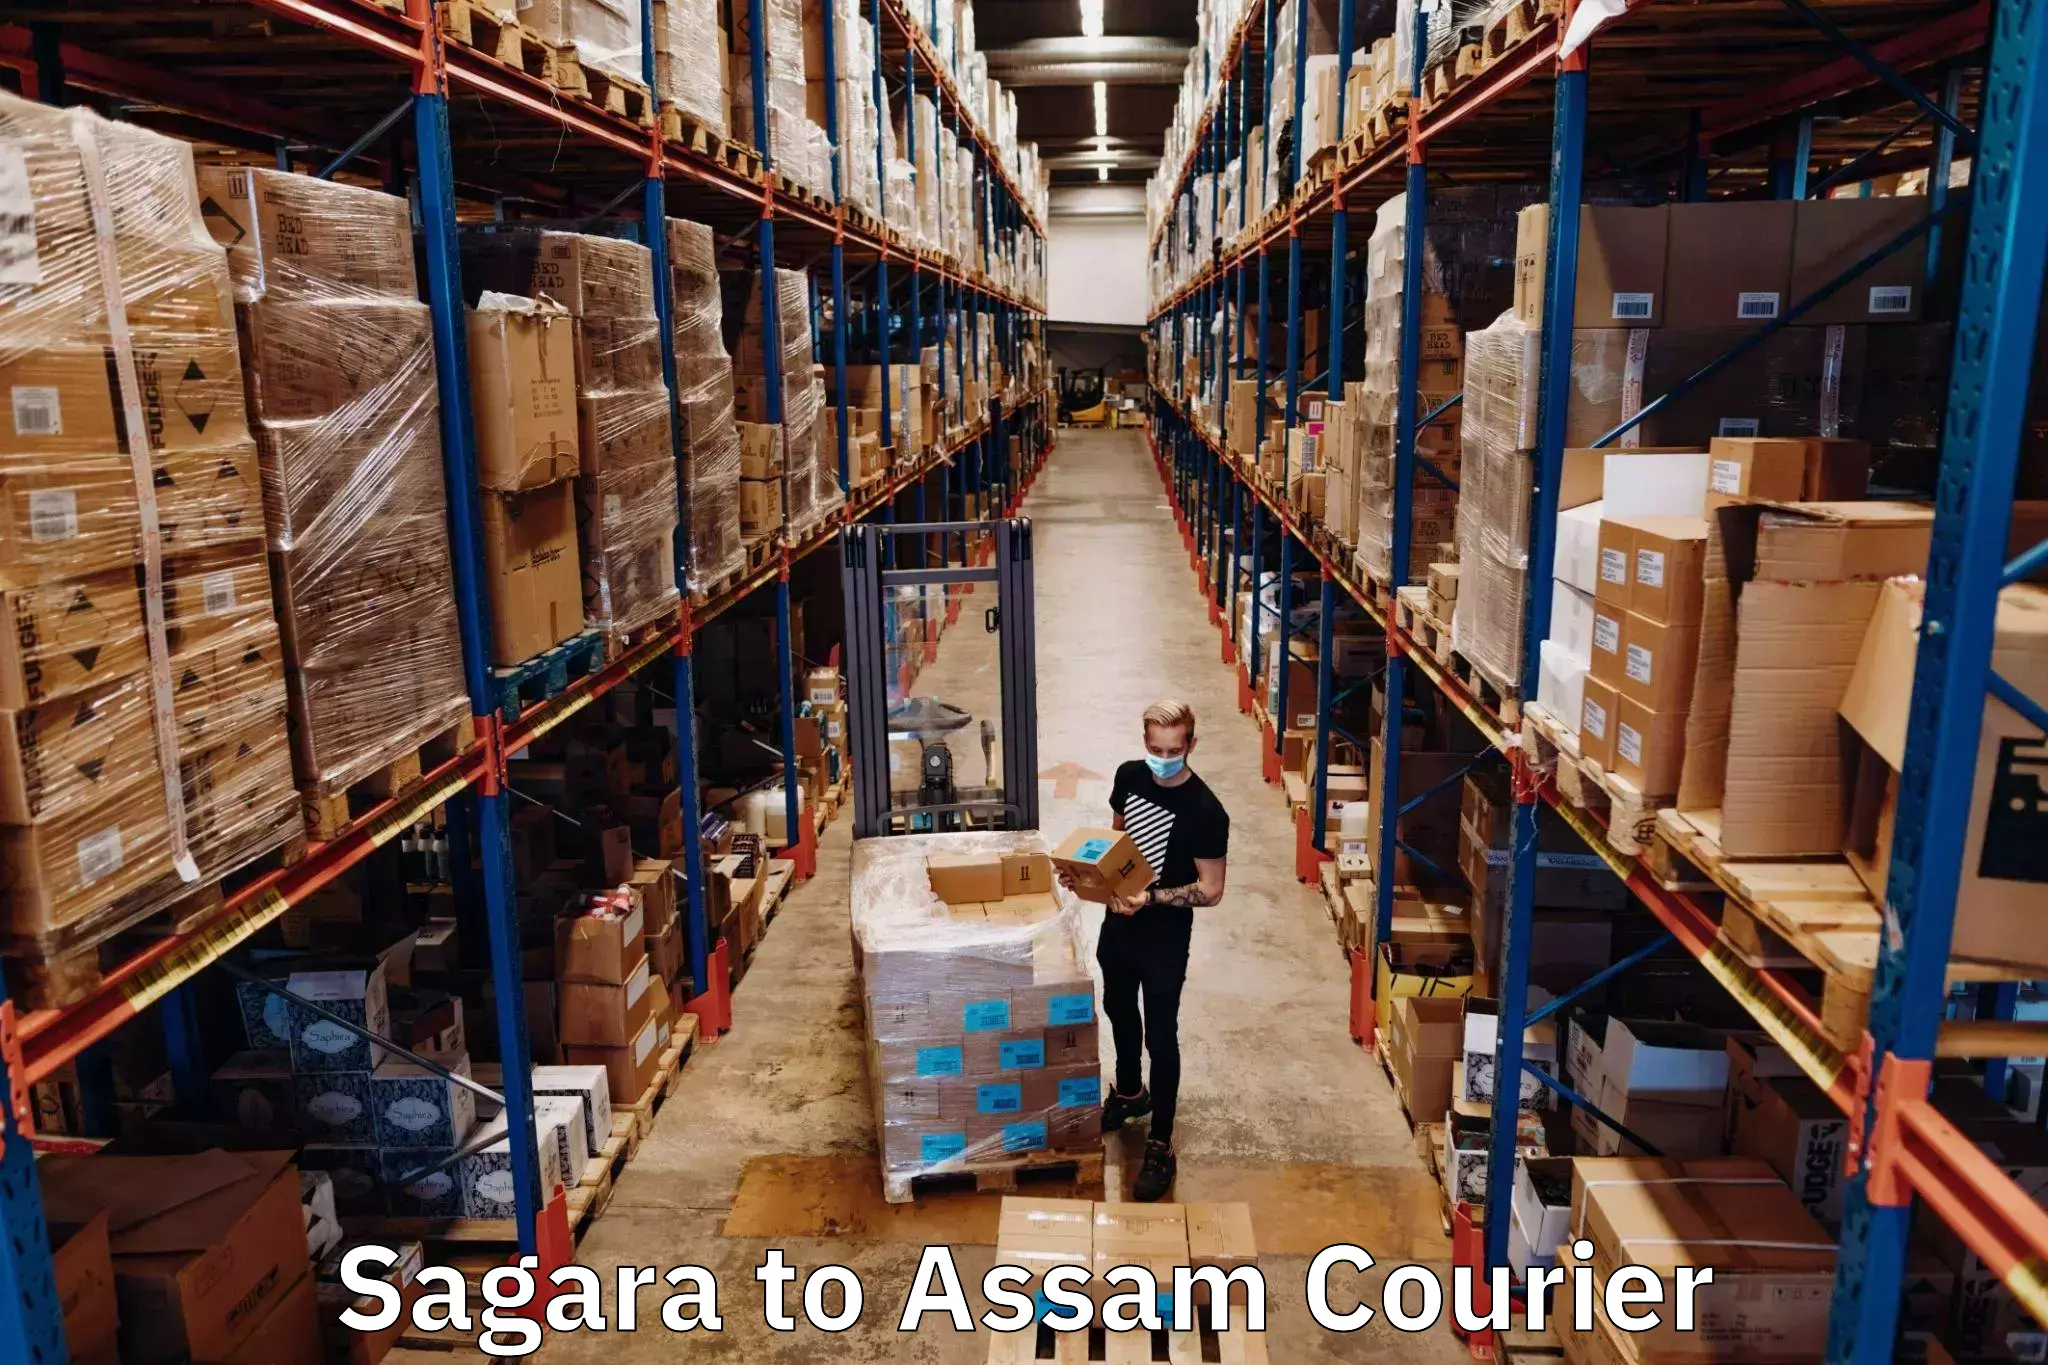 High-speed parcel service Sagara to Jonai